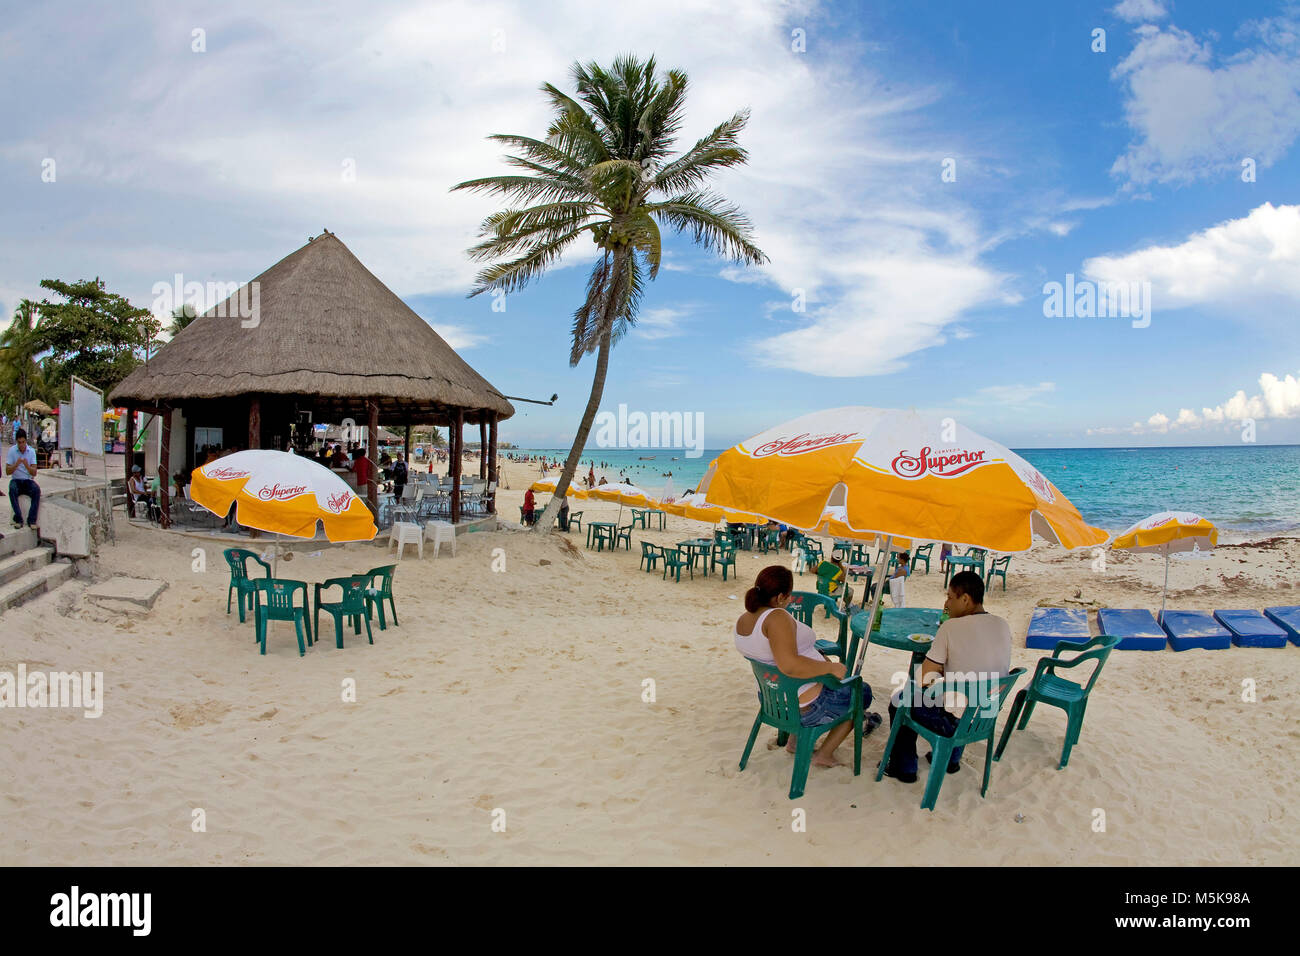 Strandbar am Strand von Playa del Carmen, Playa del Carmen, Mexiko, Karibik | Beach bar presso la spiaggia di Playa del Carmen, Messico, Caraibi Foto Stock